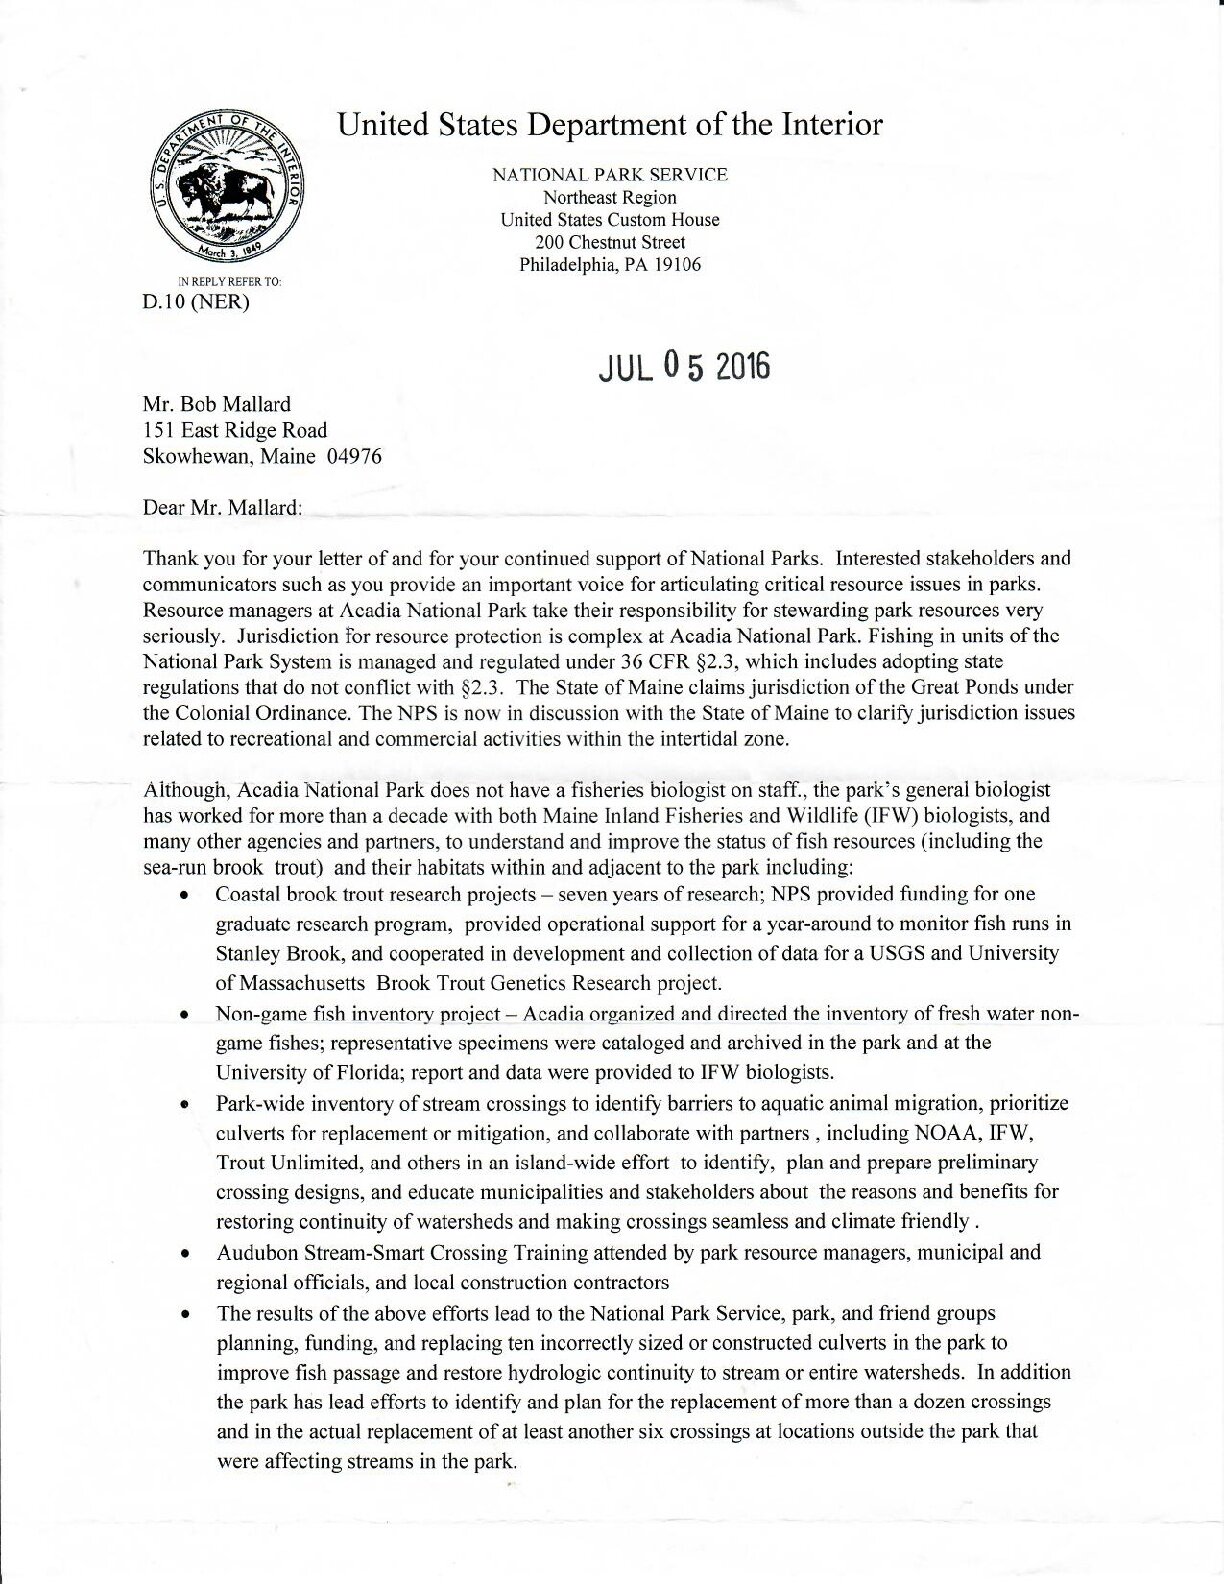 US Dept of Interior Letter- 7.5.16.jpg